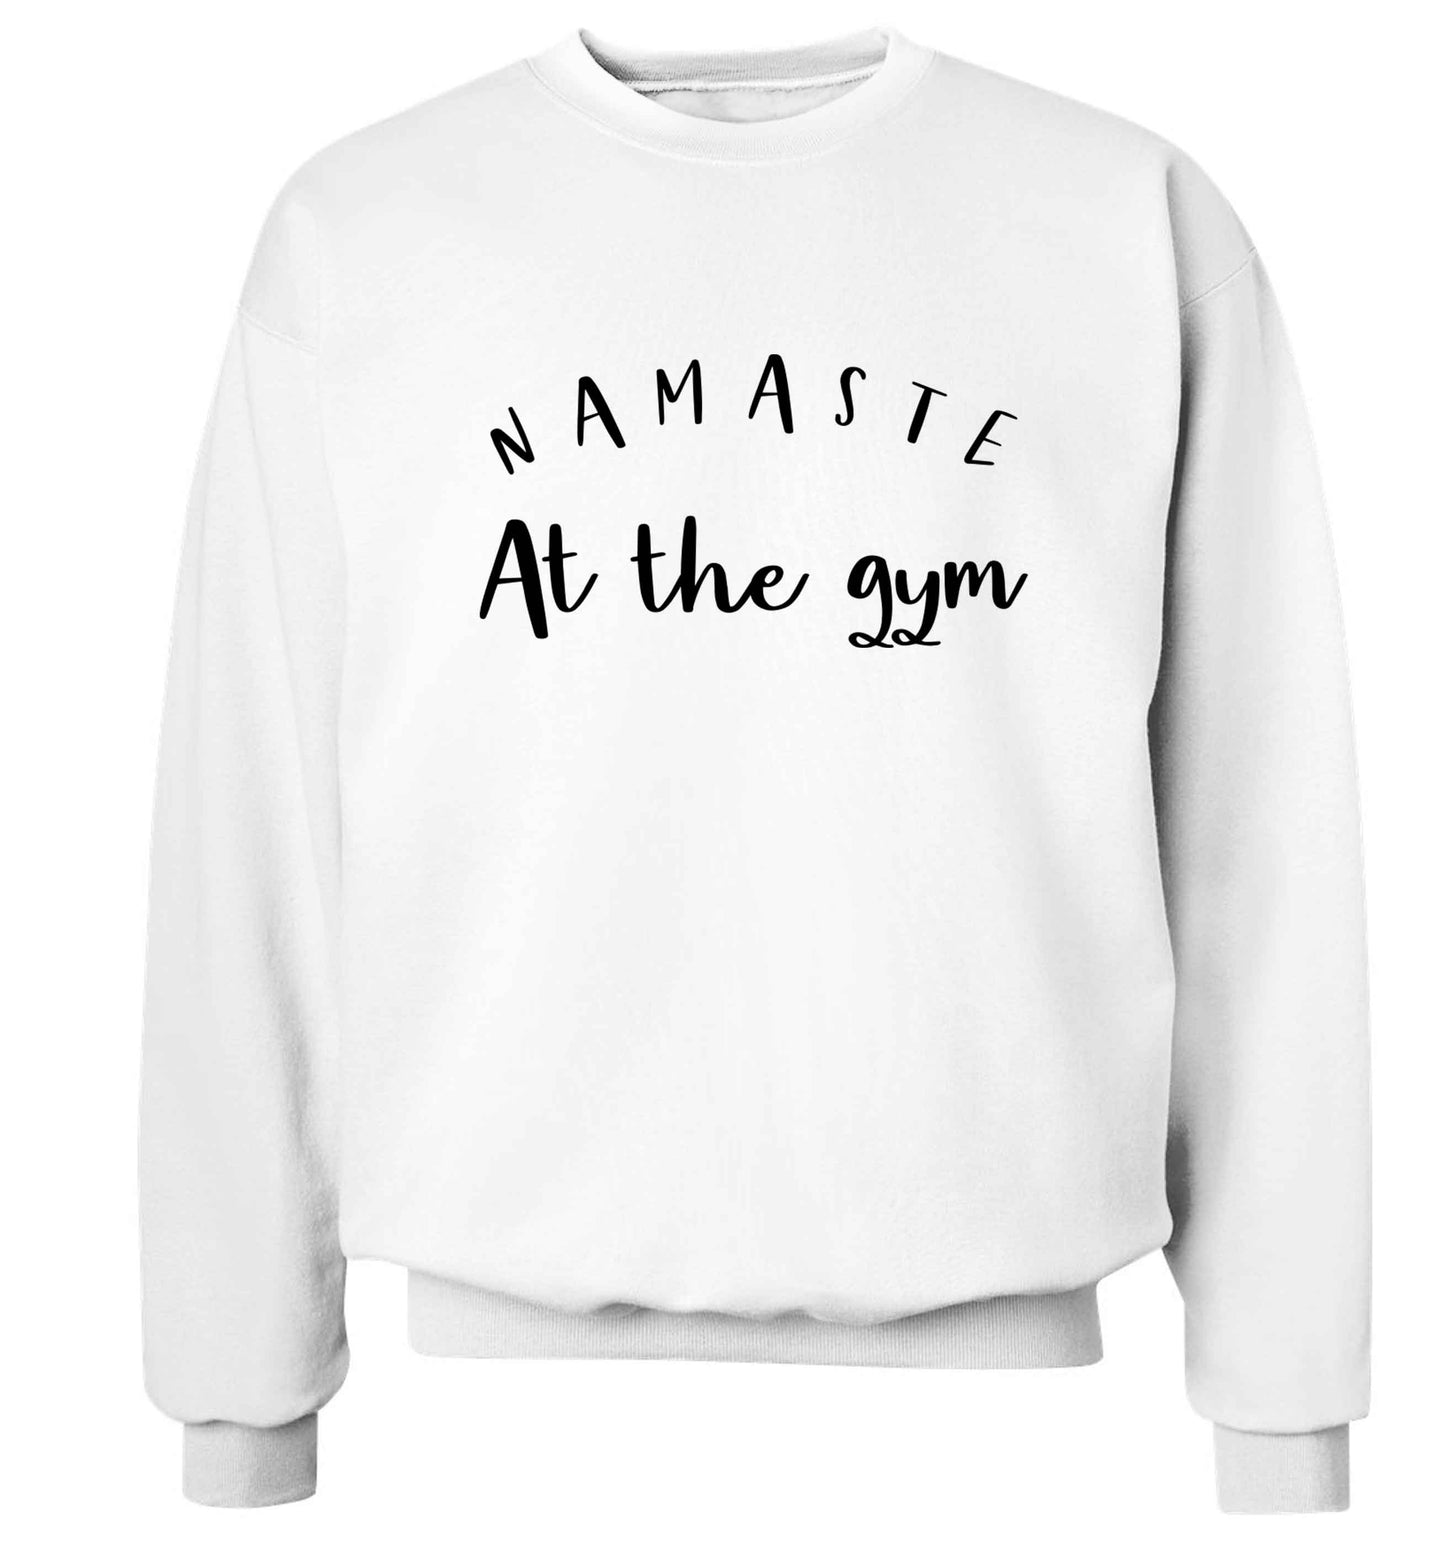 Namaste at the gym Adult's unisex white Sweater 2XL